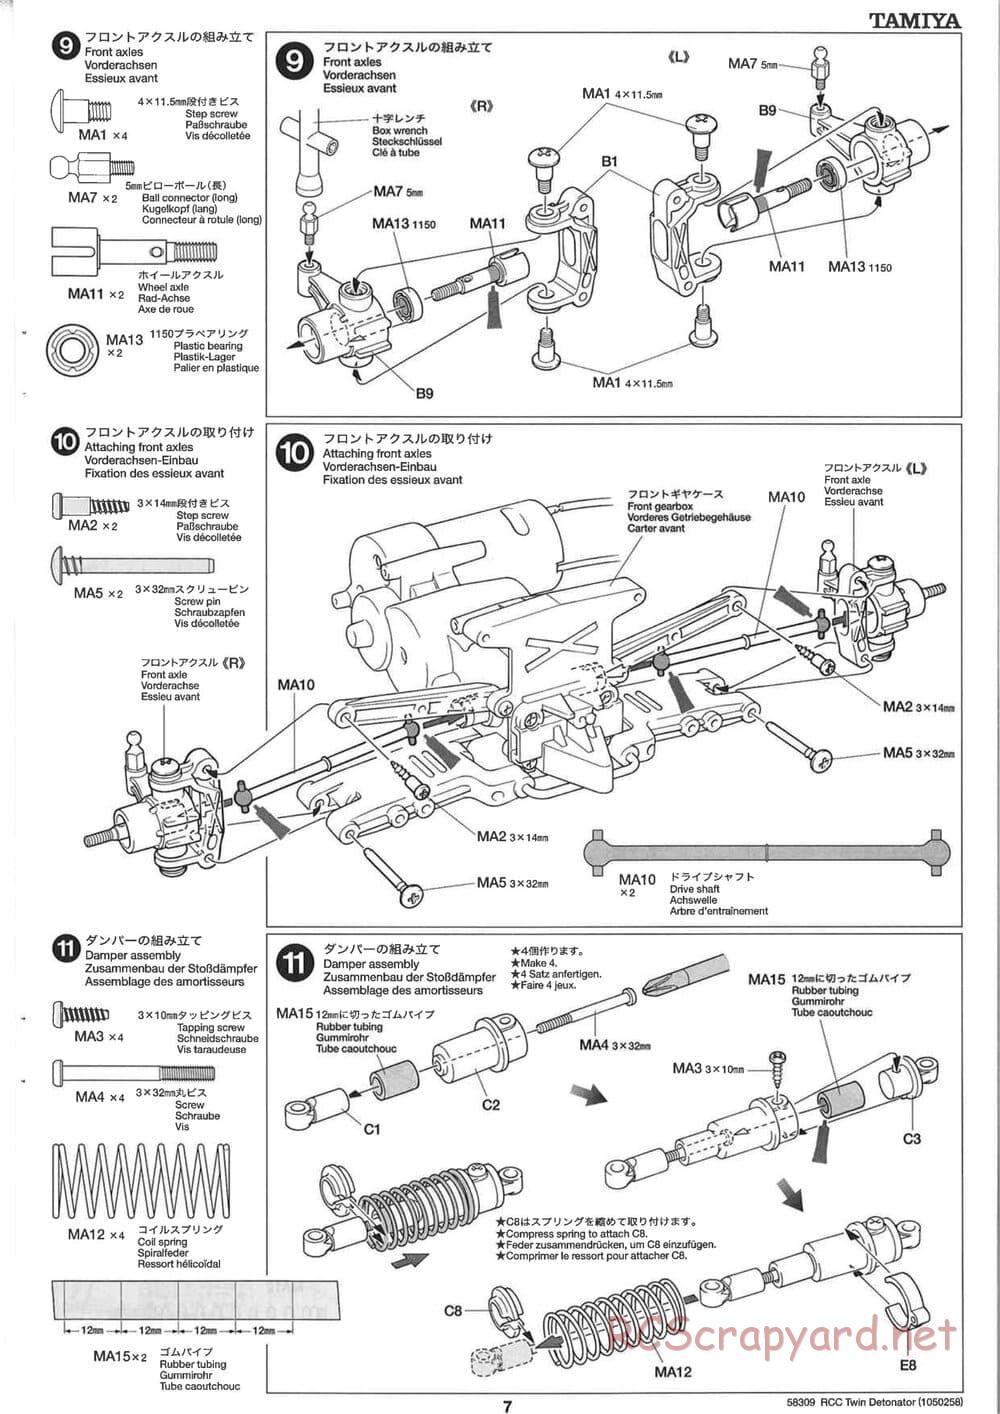 Tamiya - Twin Detonator - WR-01 Chassis - Manual - Page 7